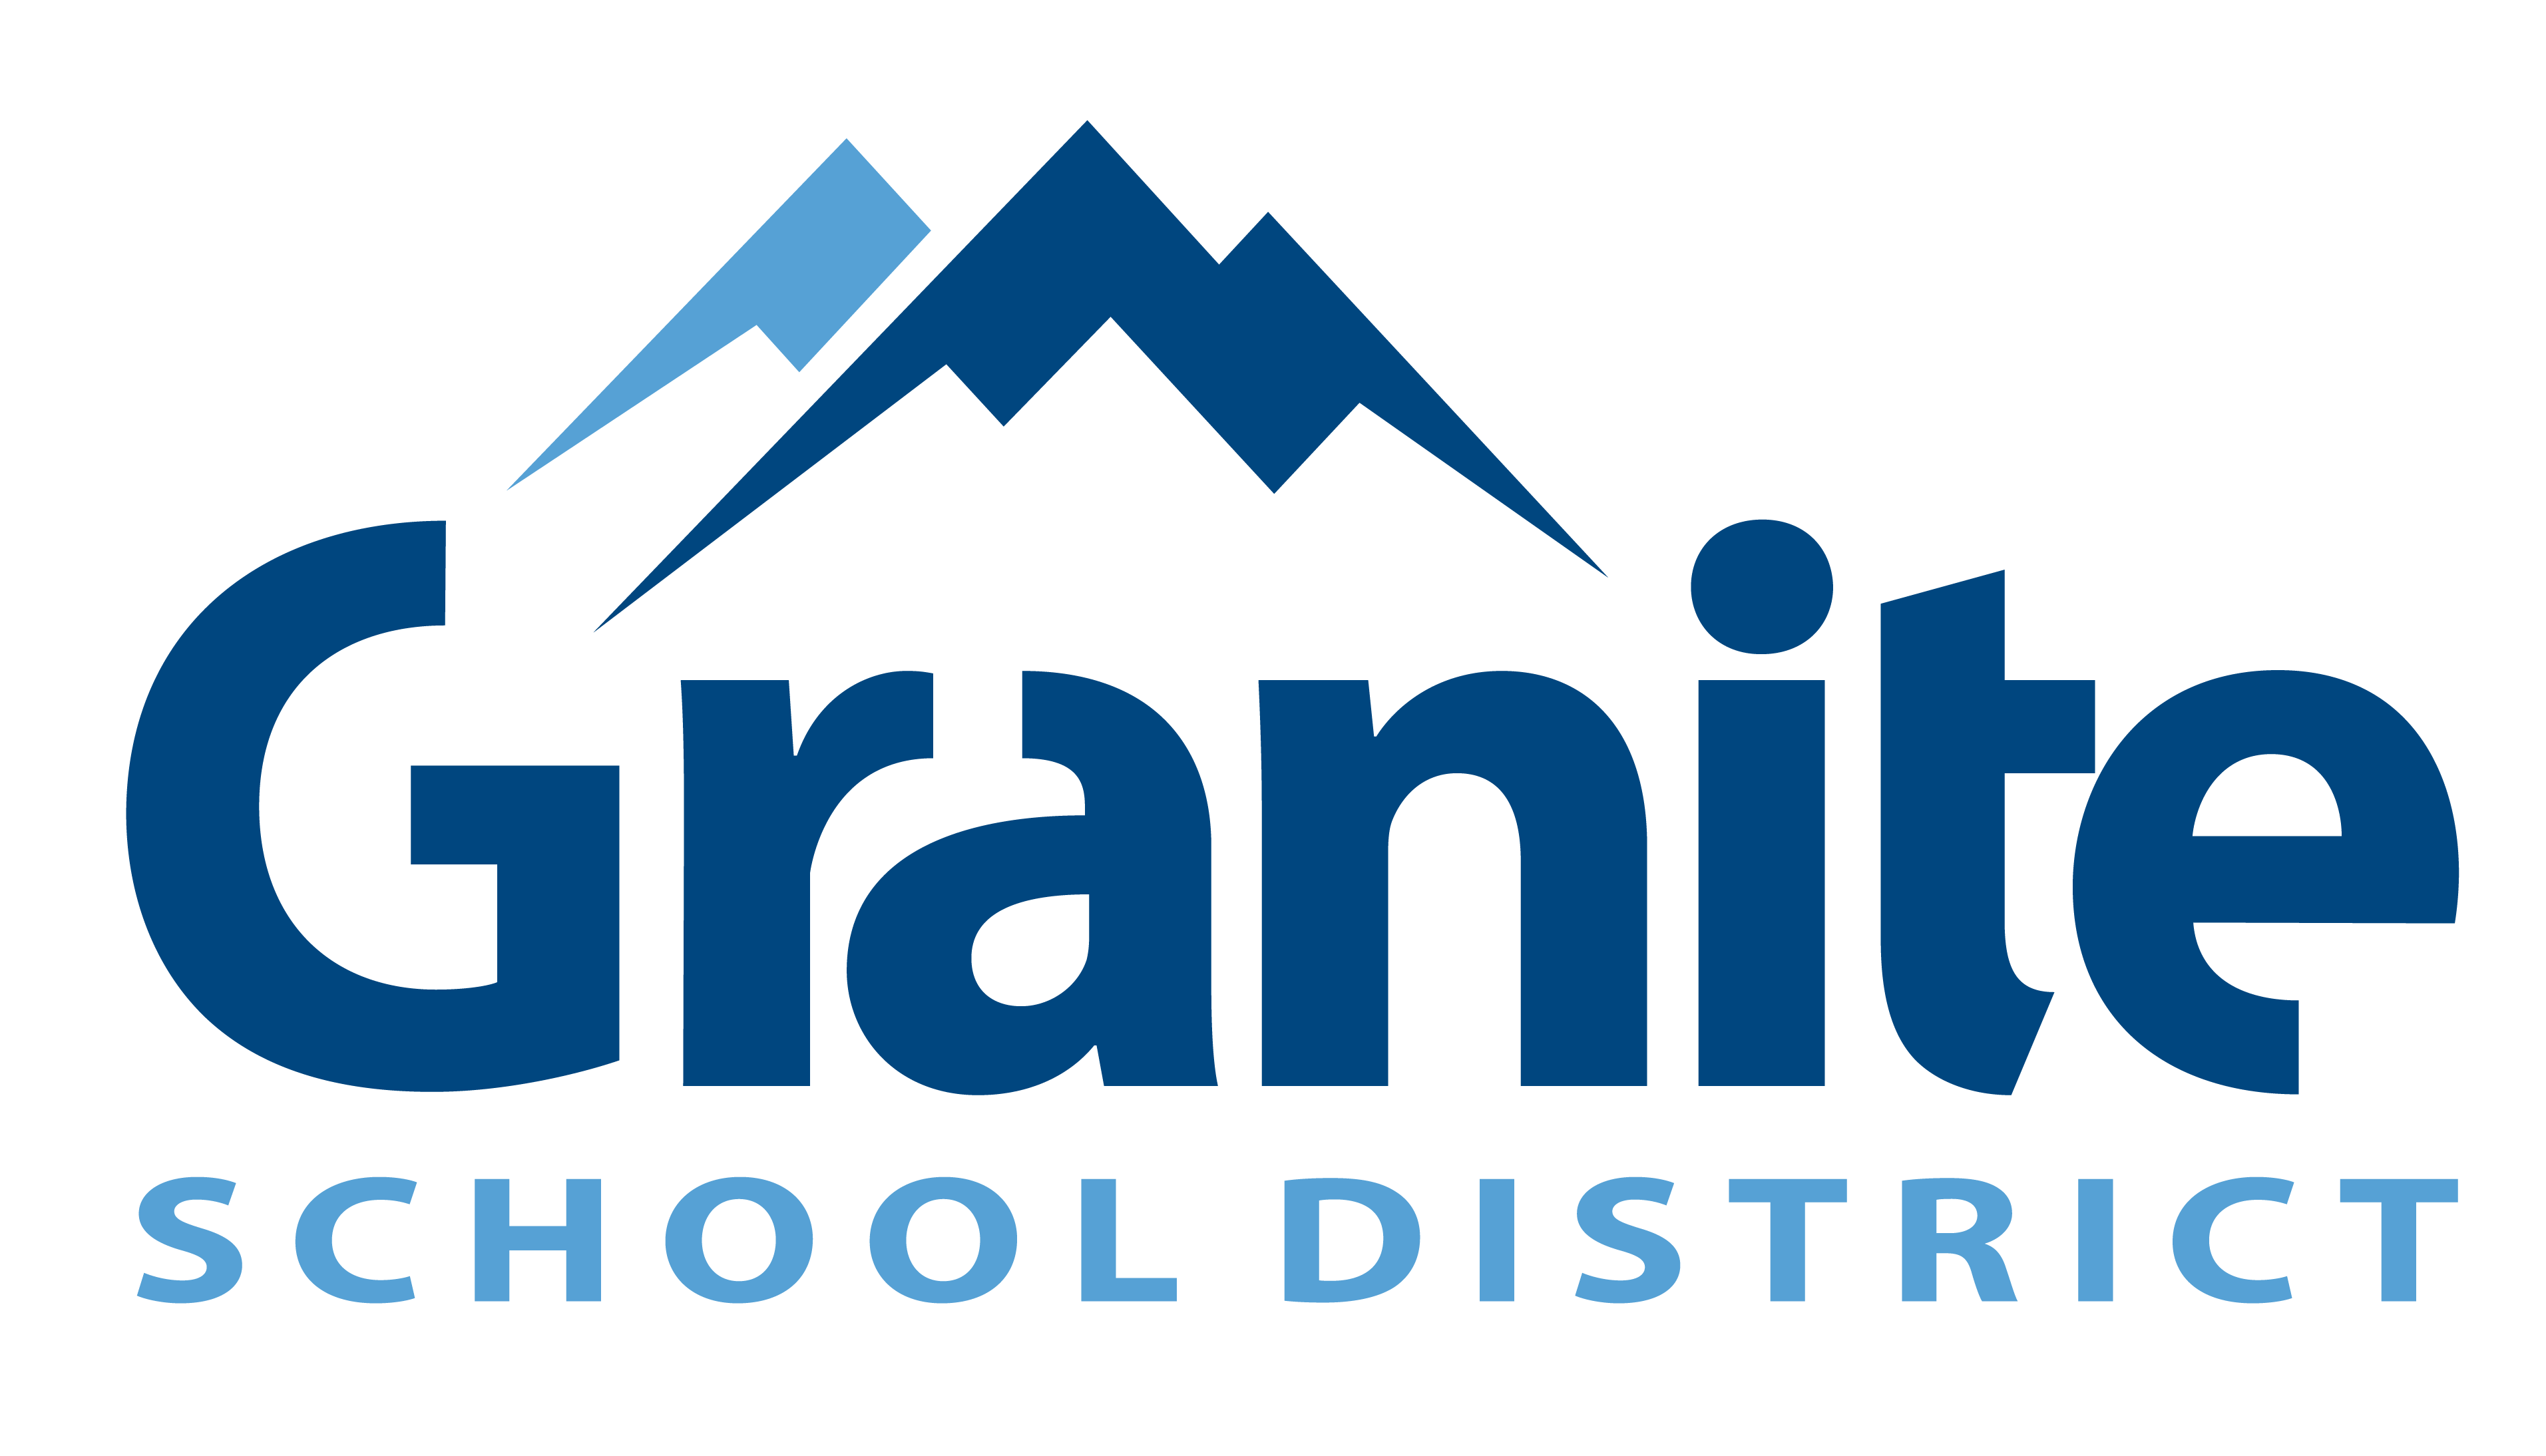 Granite School District Logo